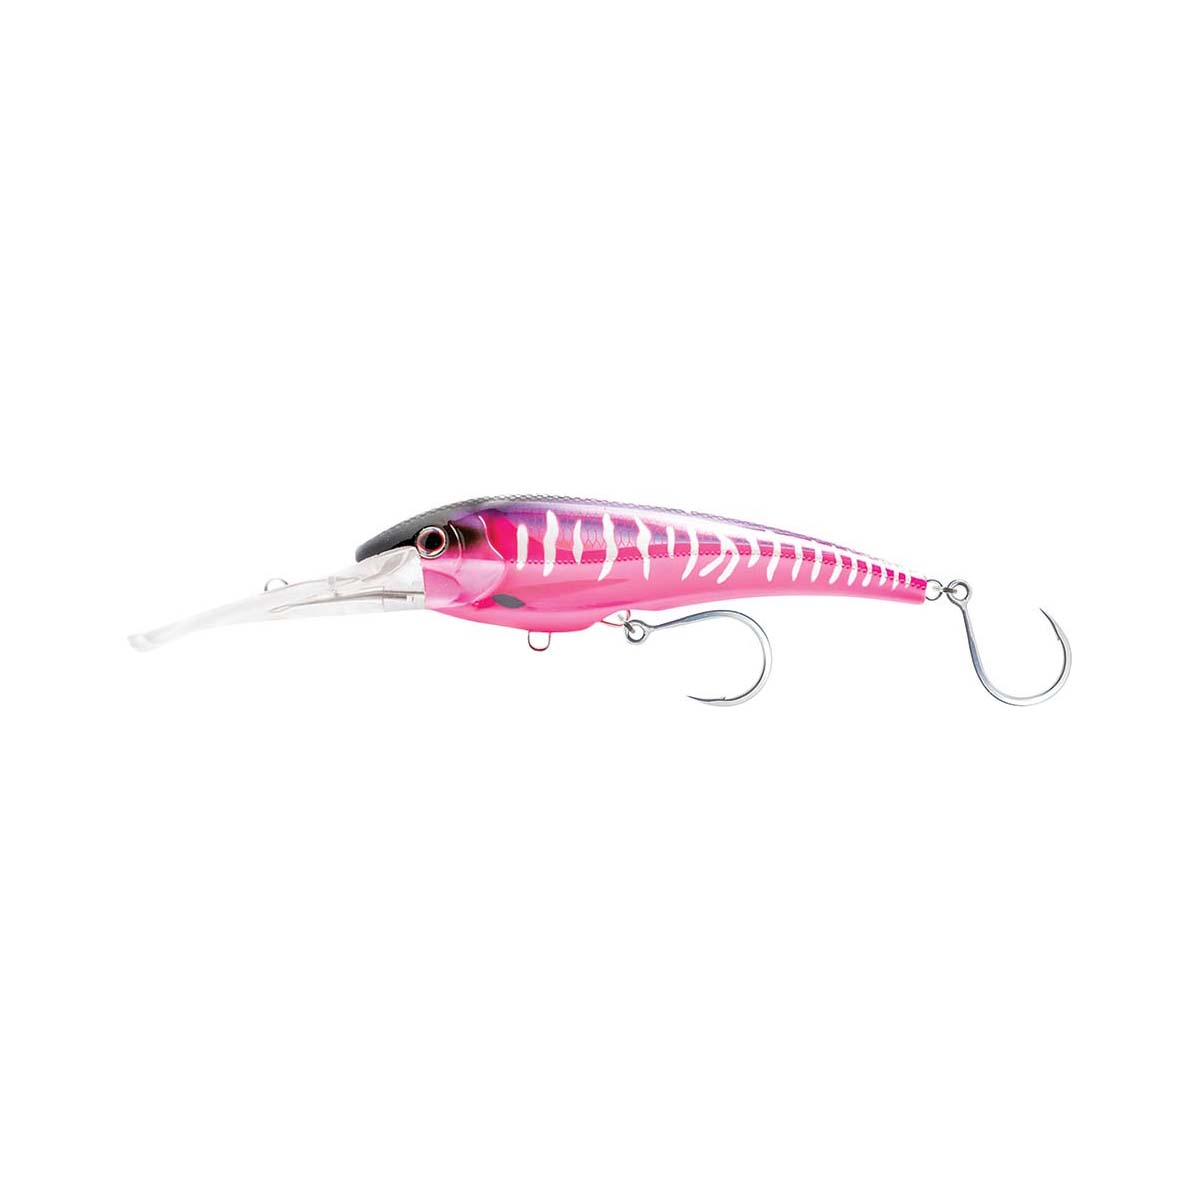 Nomad DTX Minnow Hard Body Lure 16.5cm S Hot Pink Mackerel @ Club BCF